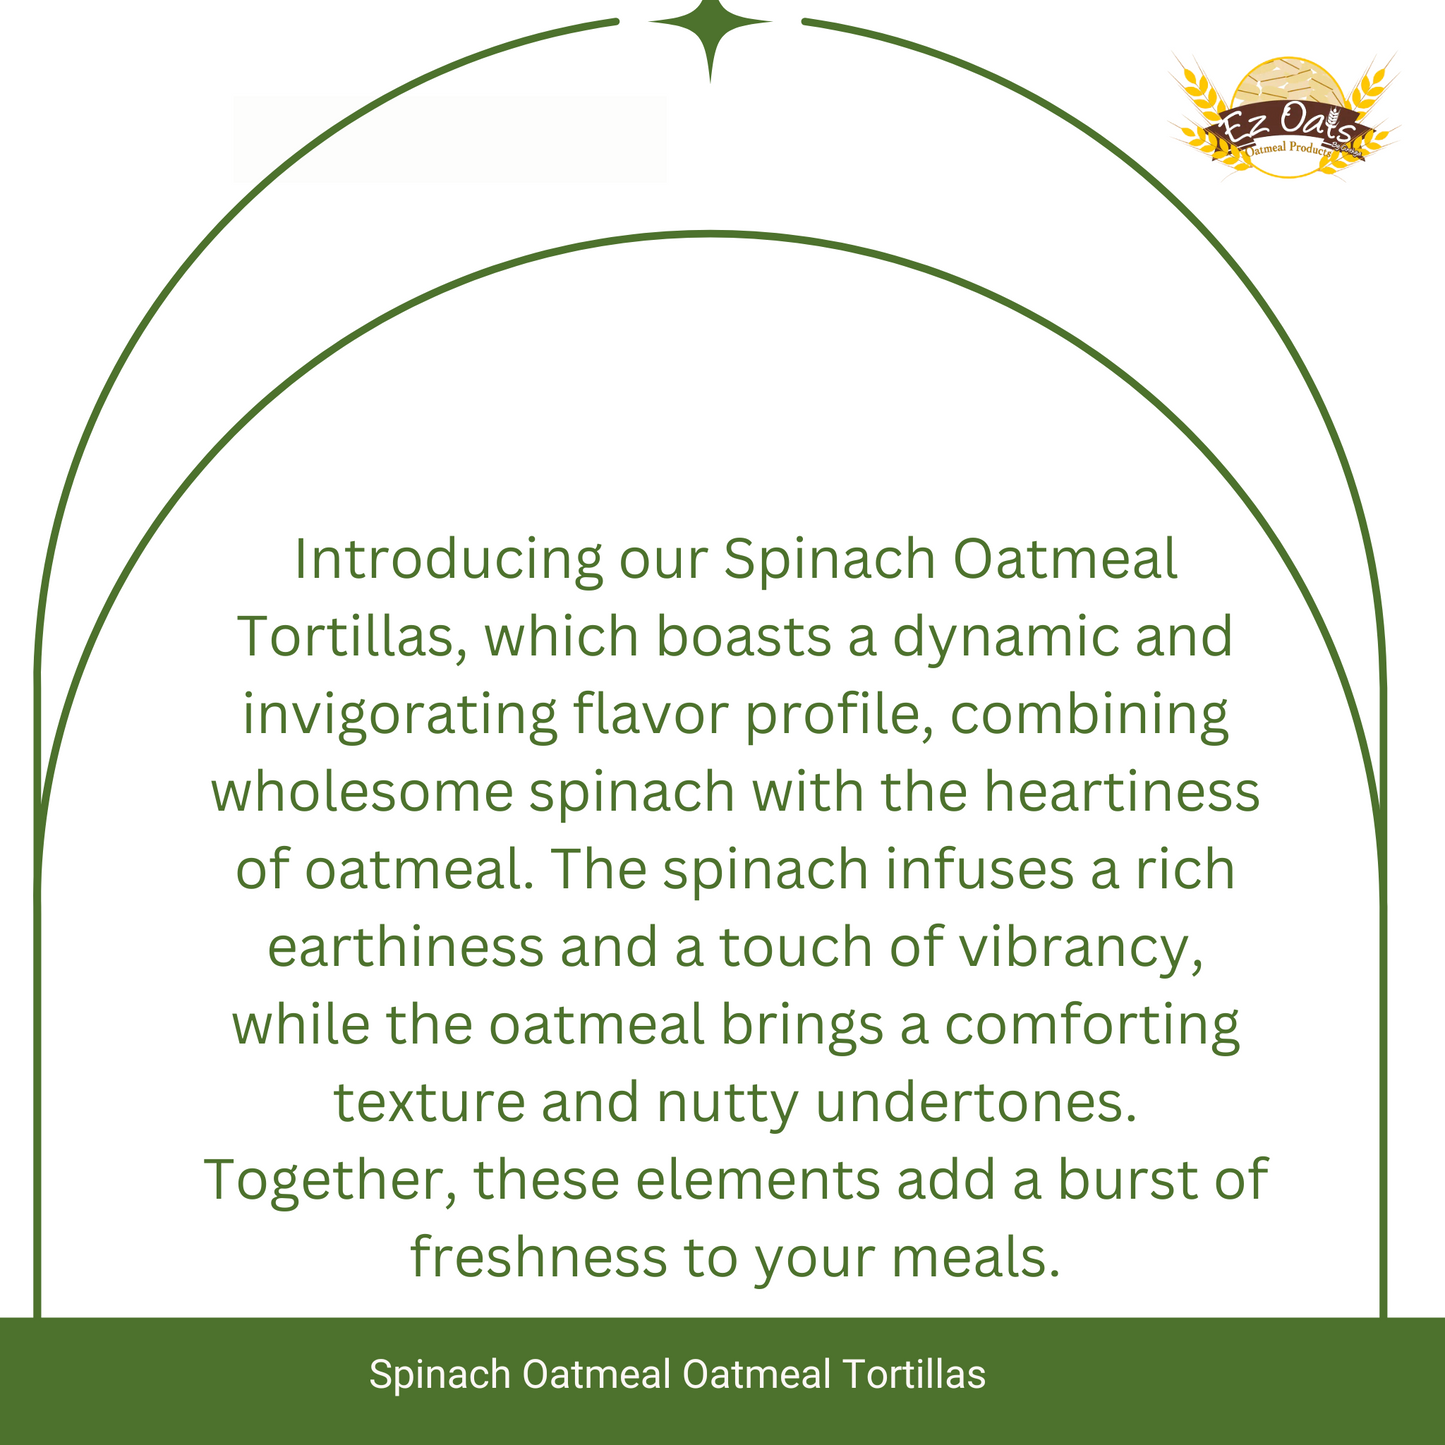 Spinach Oatmeal Tortillas | 4 Packs of 8 Tortillas (32 Tortillas)